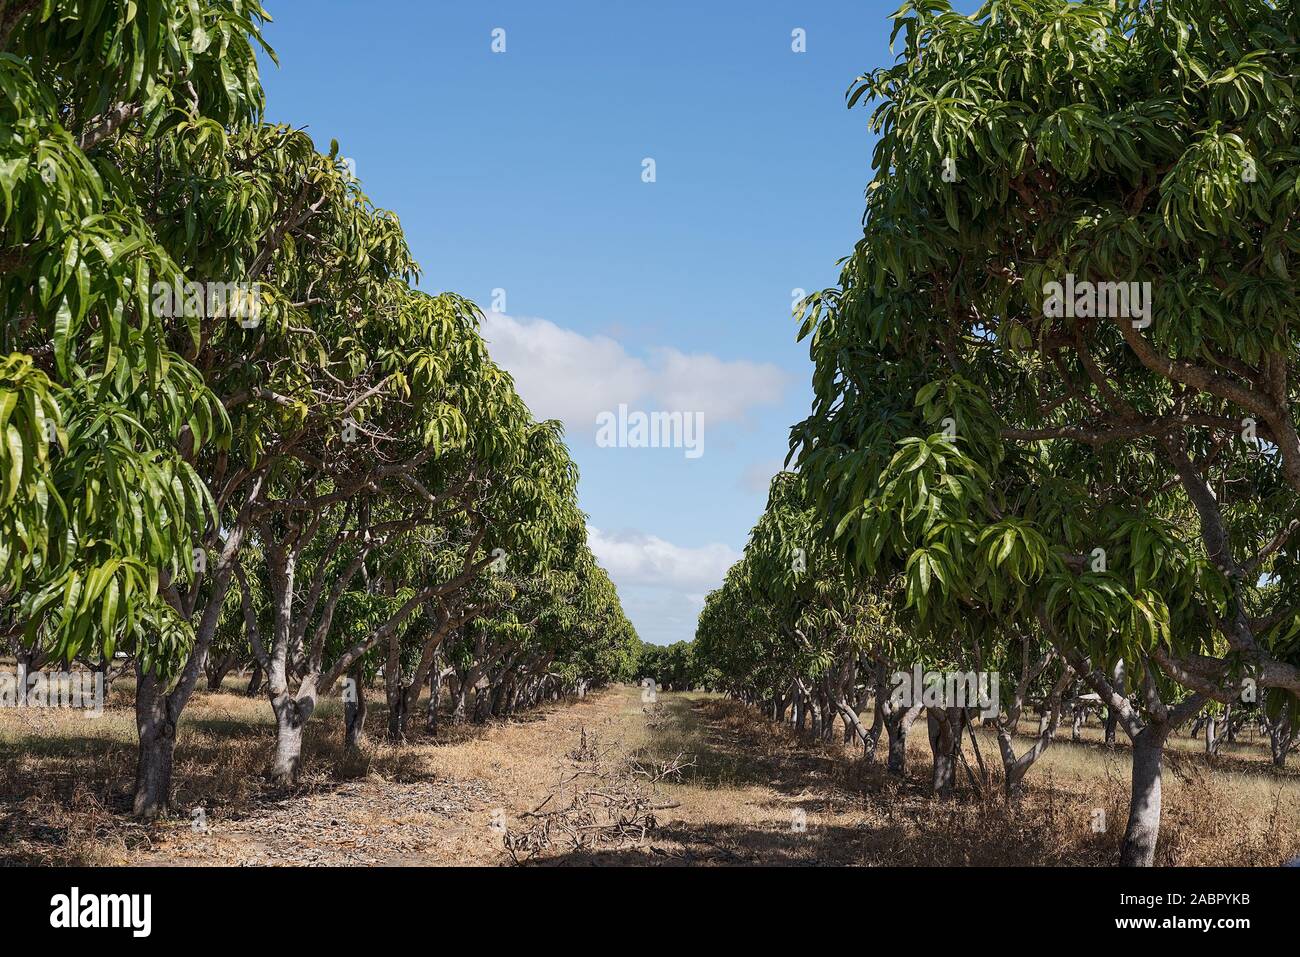 Rows of mango trees yet to bear fruit on a plantation in Australia Stock Photo